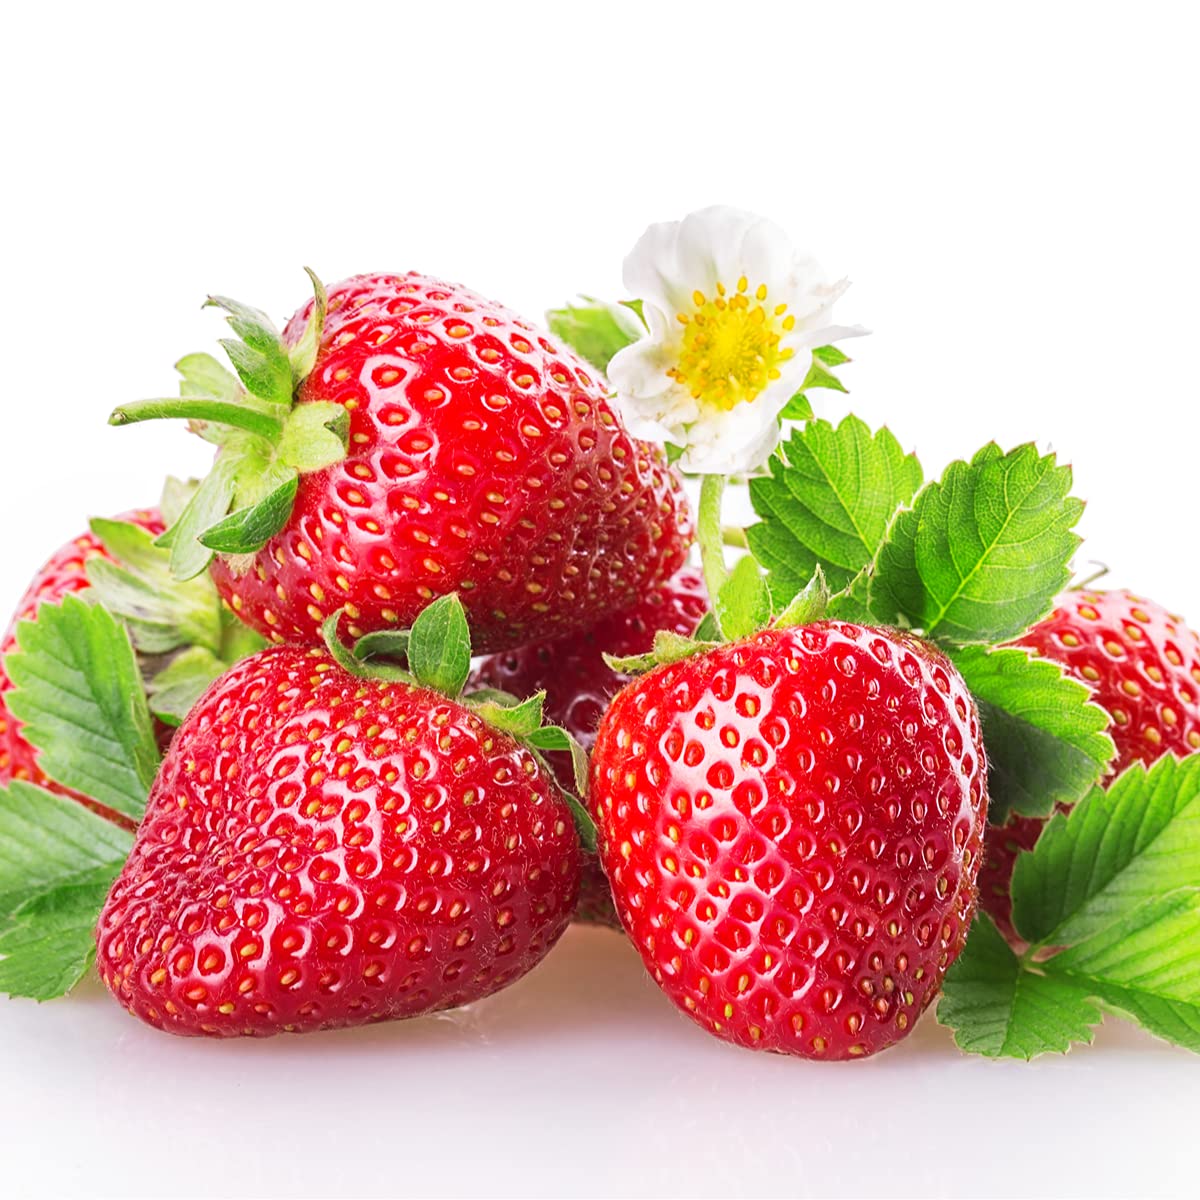 Strawberry Plants - 'Elegance' - 5 x Full Plants in 9cm Pots - AcquaGarden